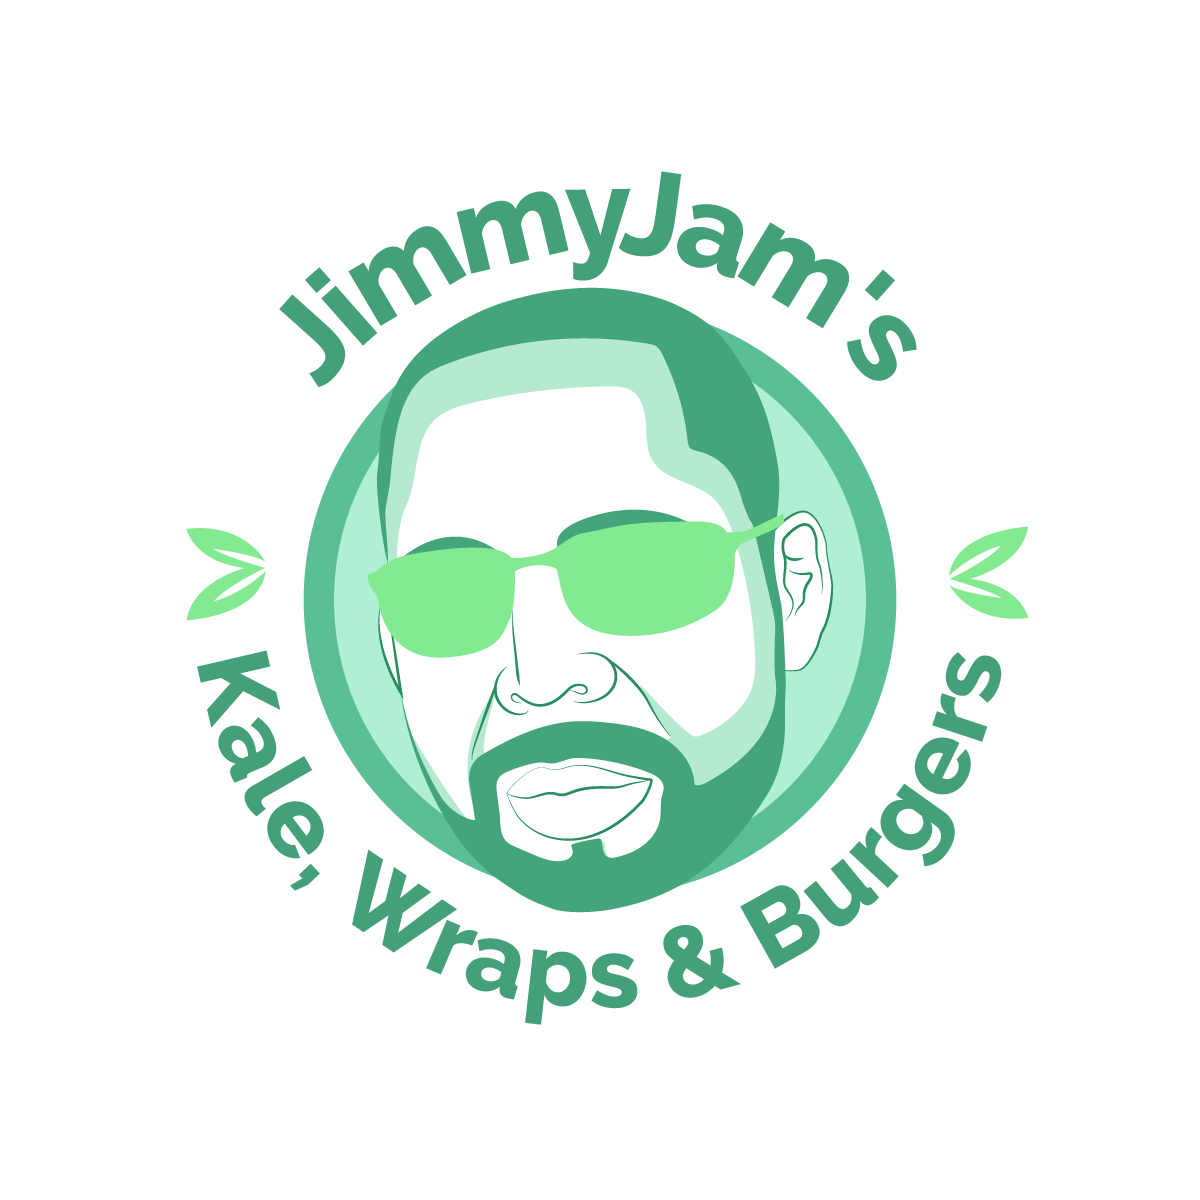 Jimmy Jam's